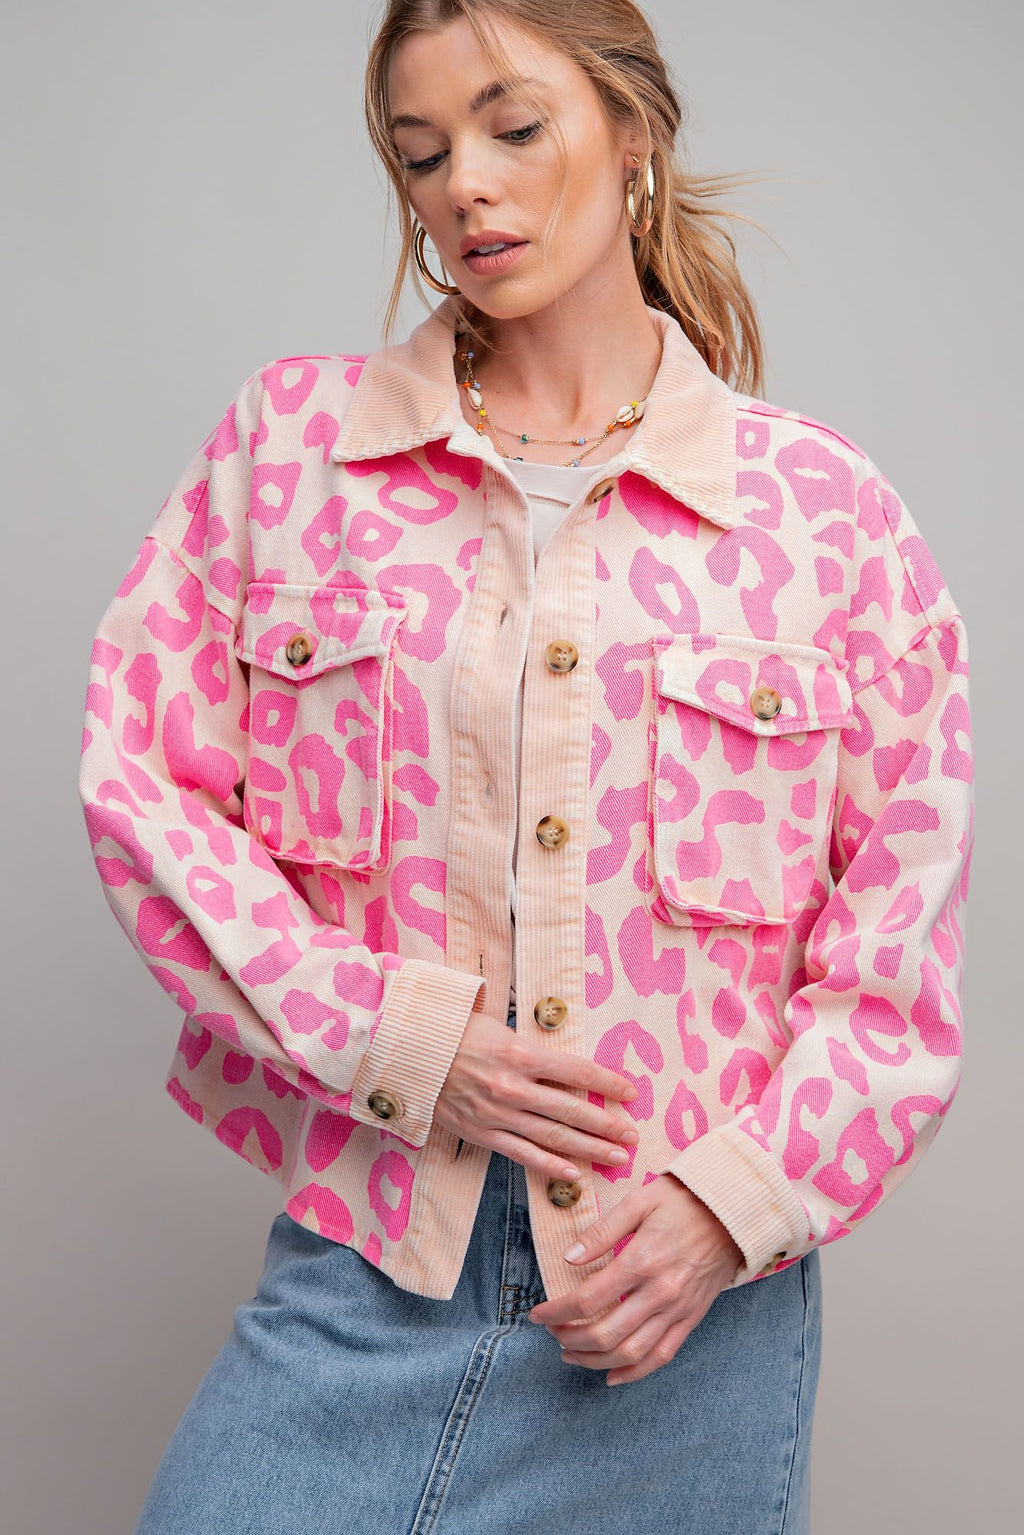 Hot Pink Cheetah Denim Jacket